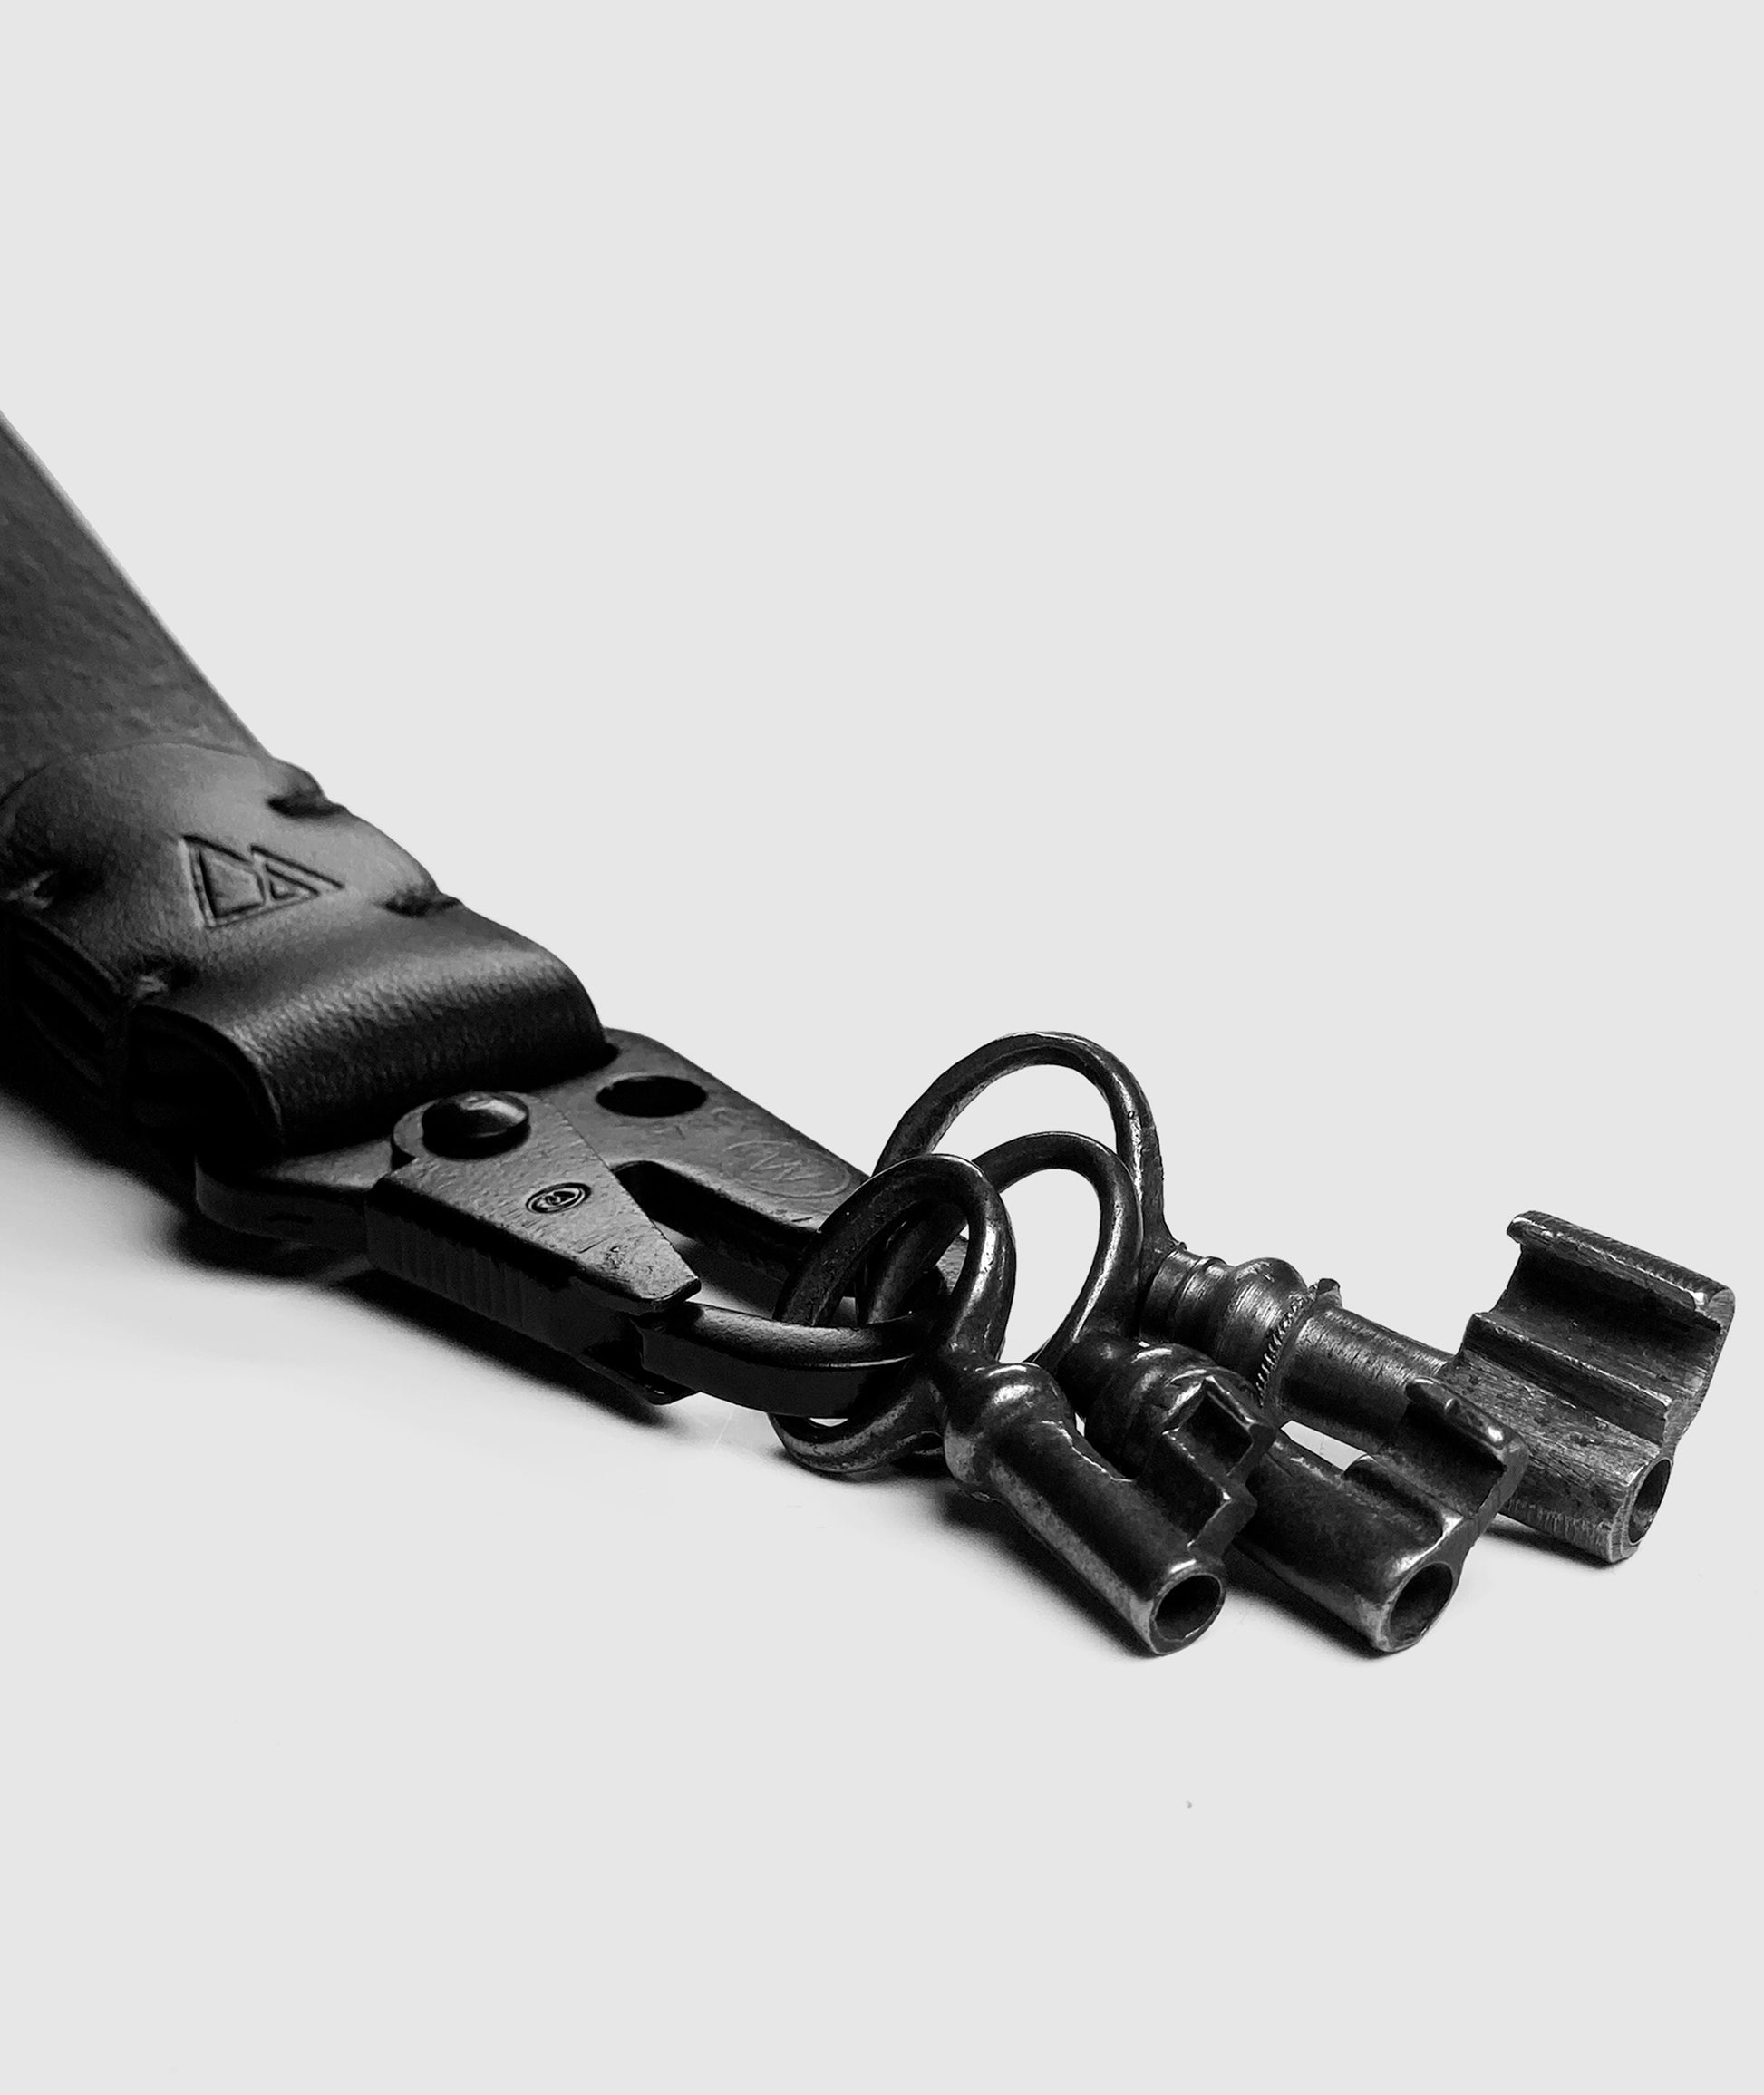 Black handmade long leather snap hook keychain by darksails - luxury leathergoods - porte clefs en cuir noir fait main